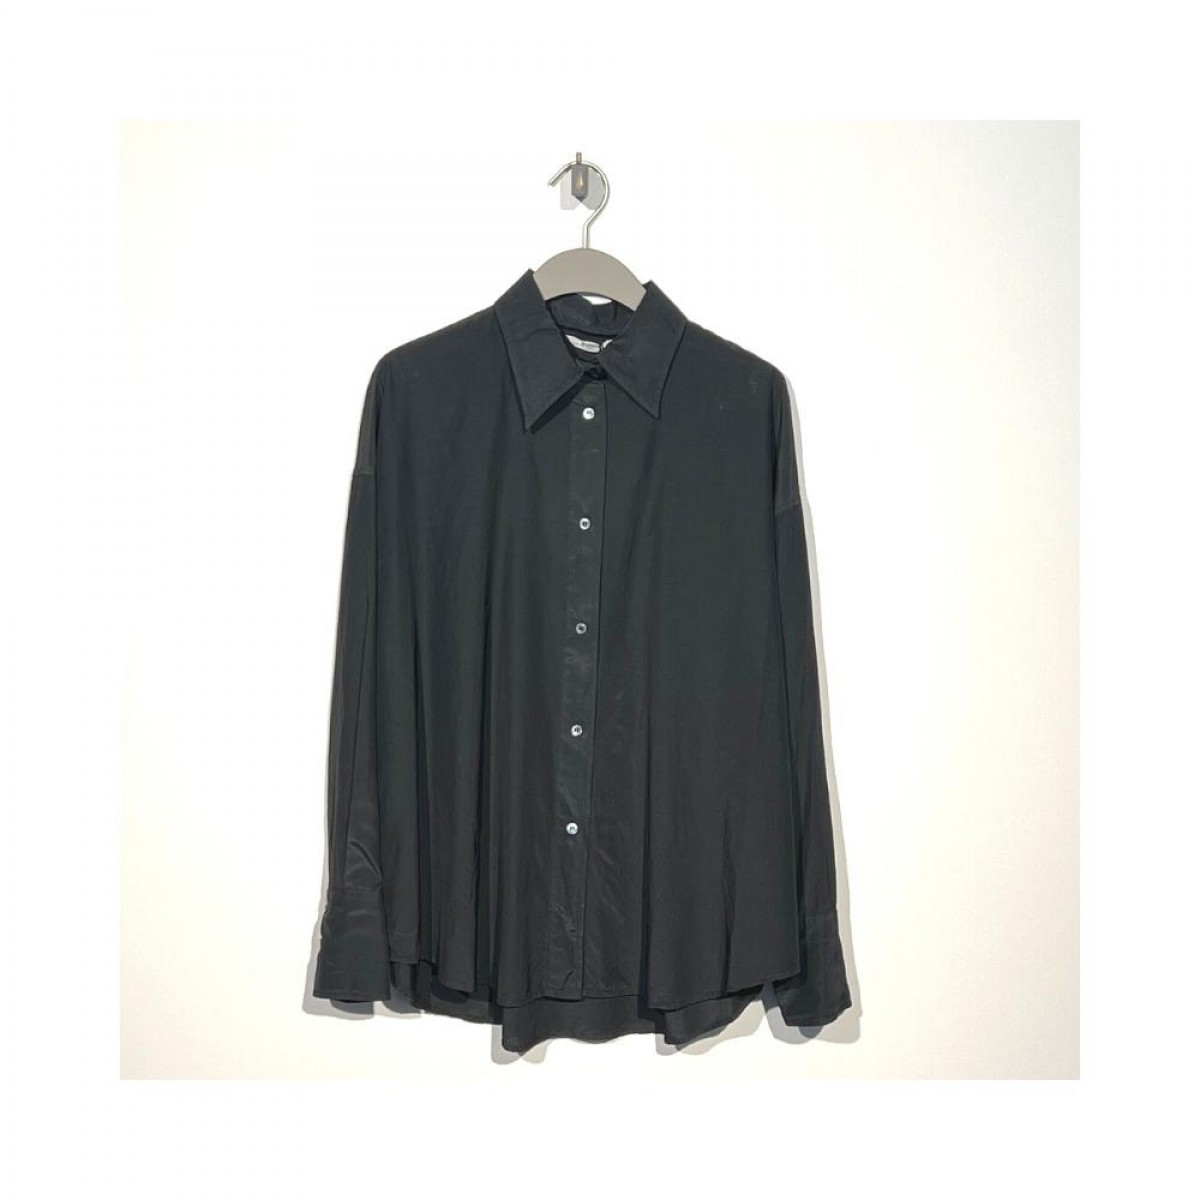 bernarda shirt - black - front 